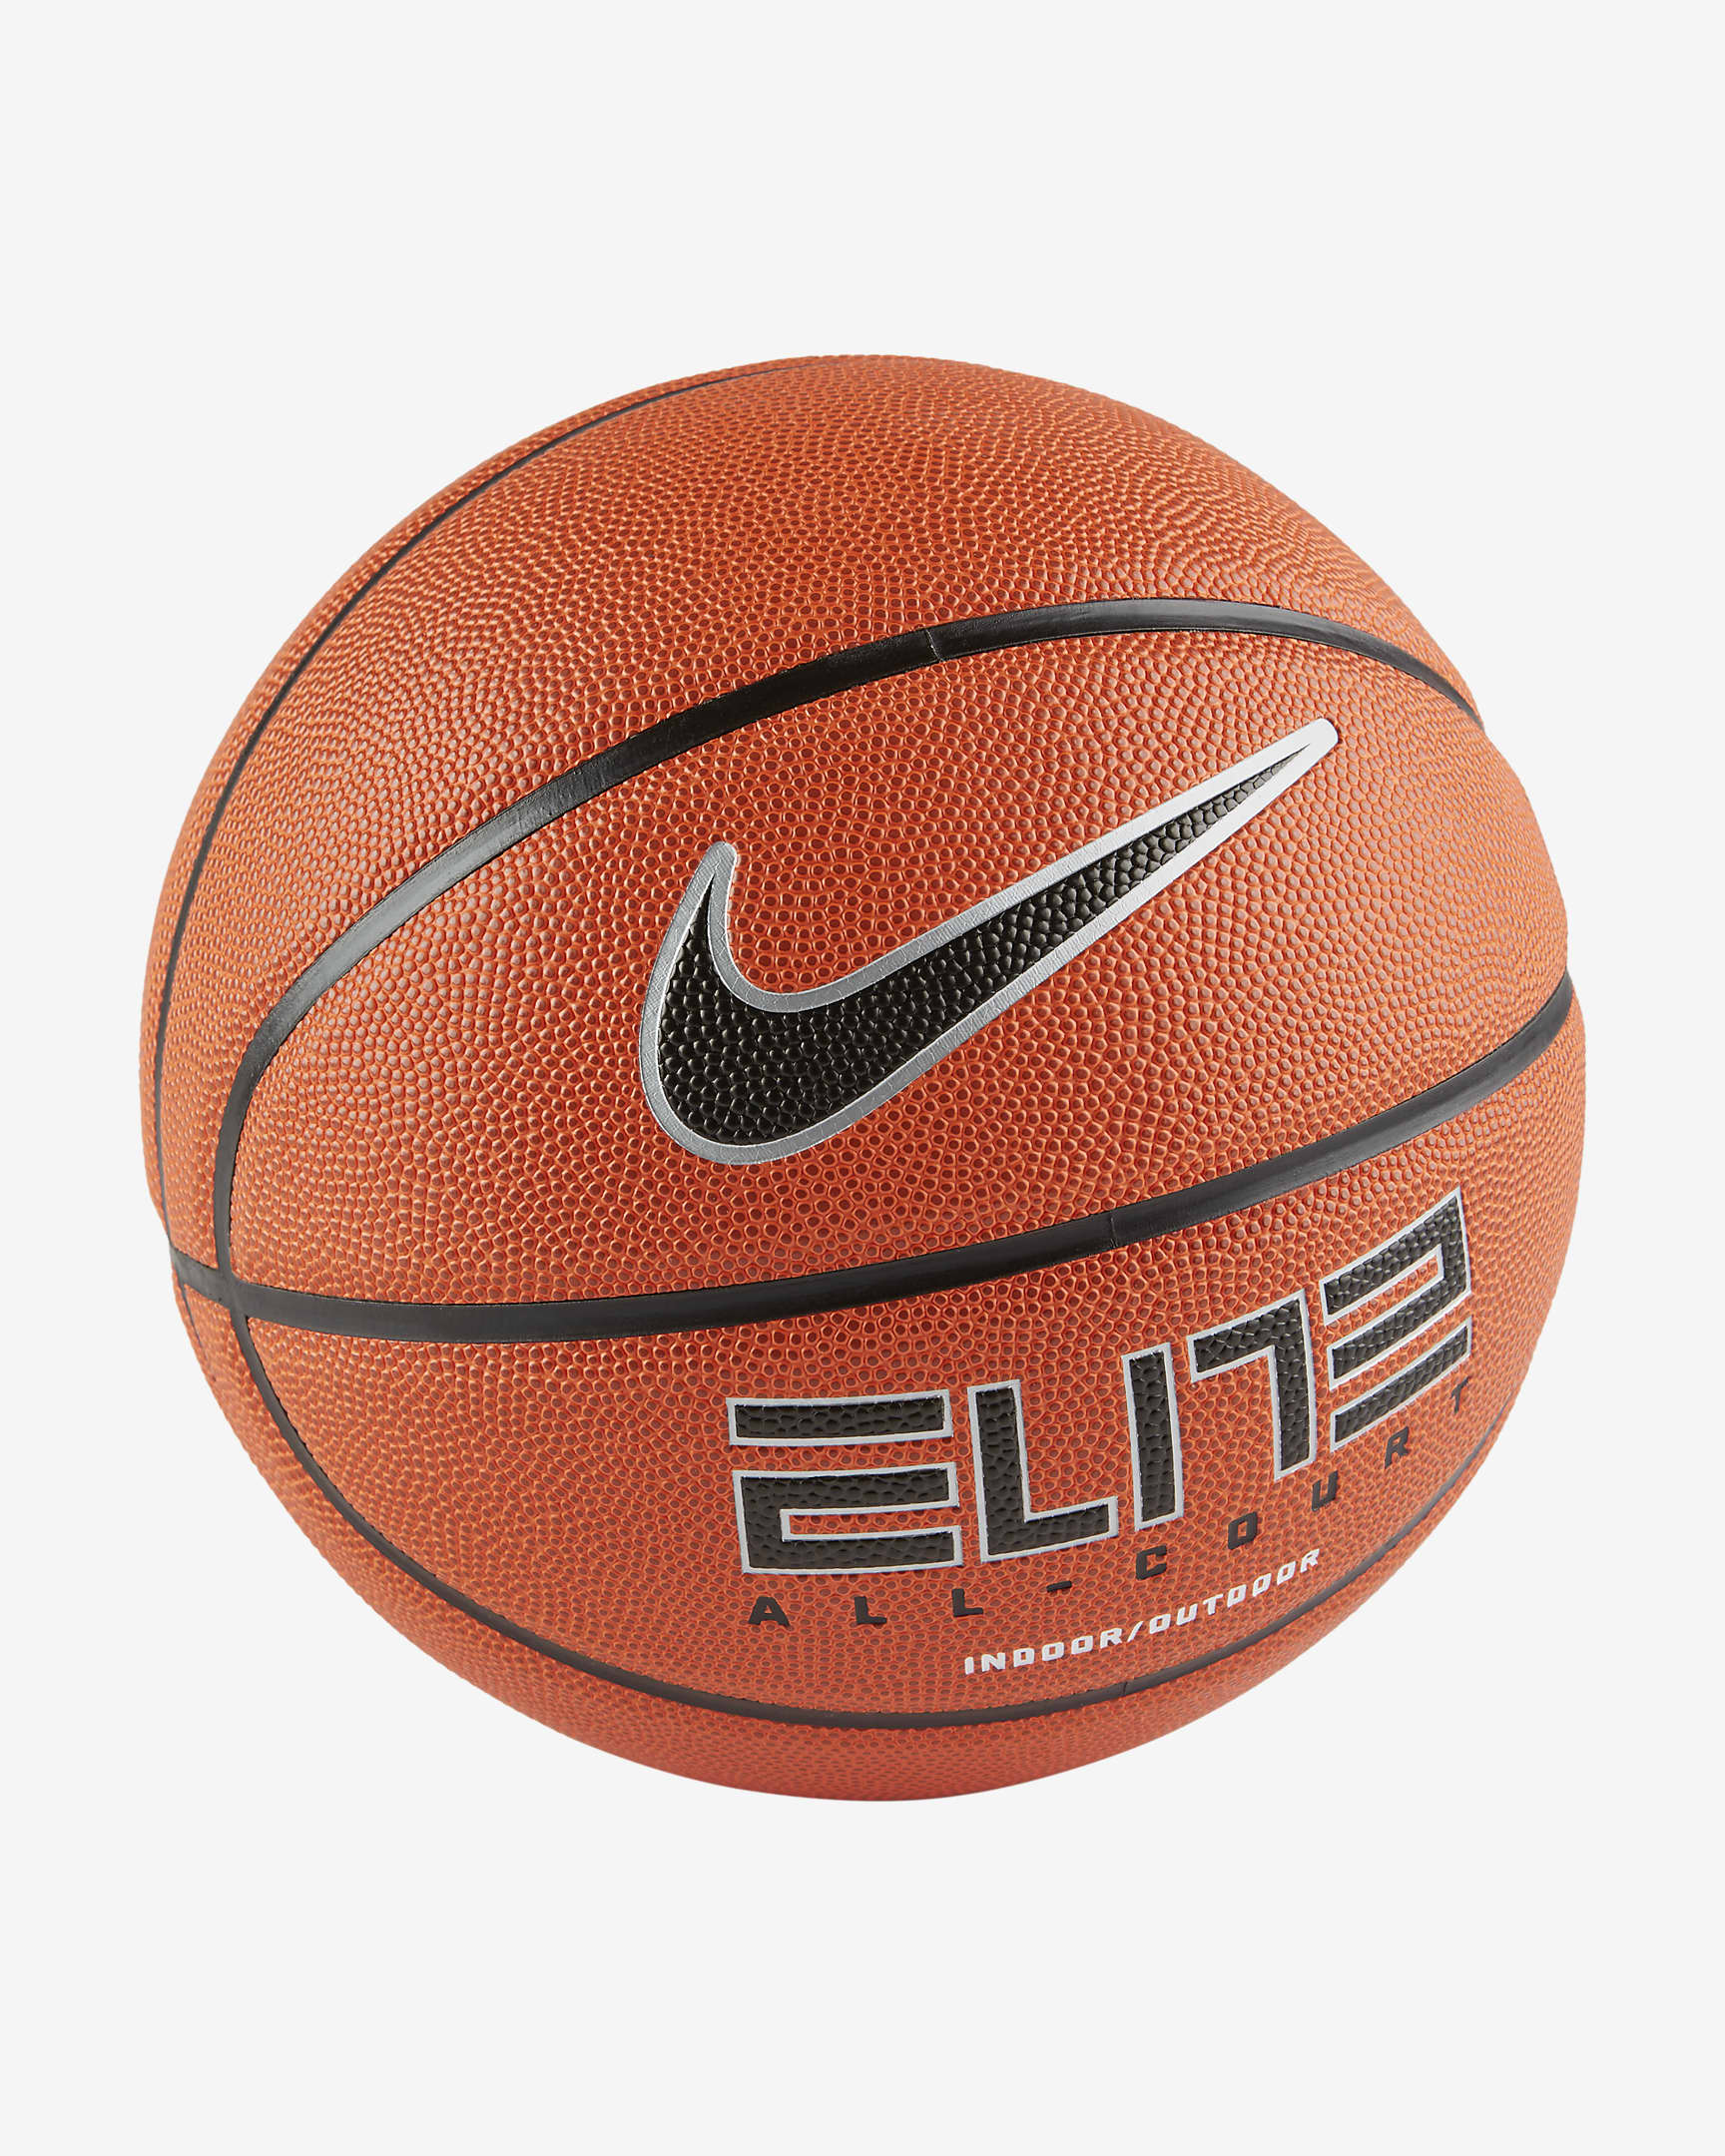 Nike Elite All-Court 8P Basketball (Deflated) - Sport Orange/Black/Metallic Silver/Black